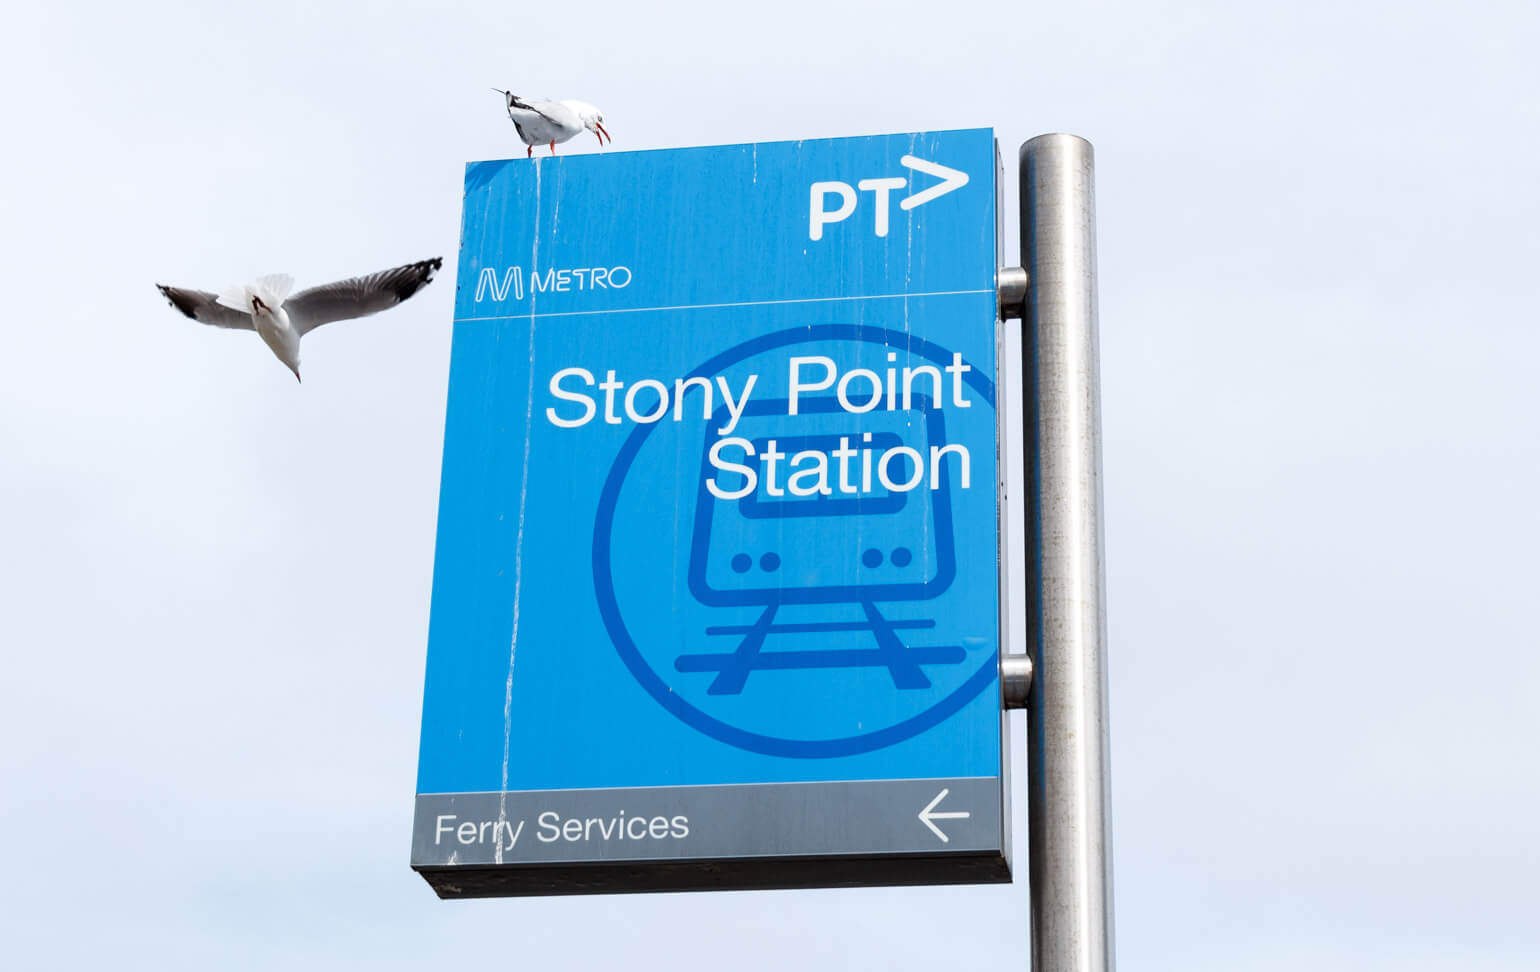 Stony Point Station